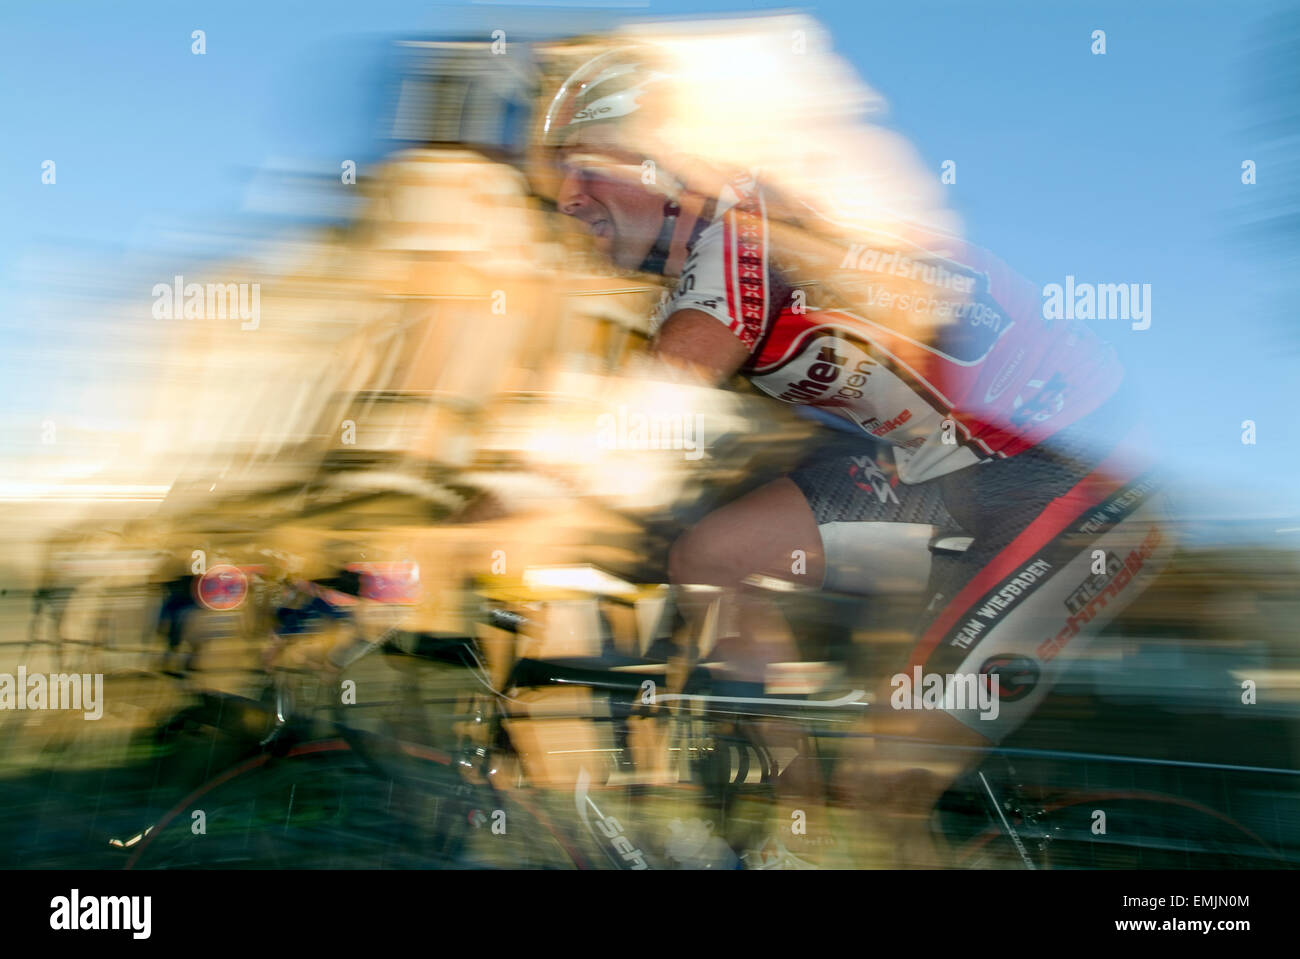 Bicyclist blurred Stock Photo